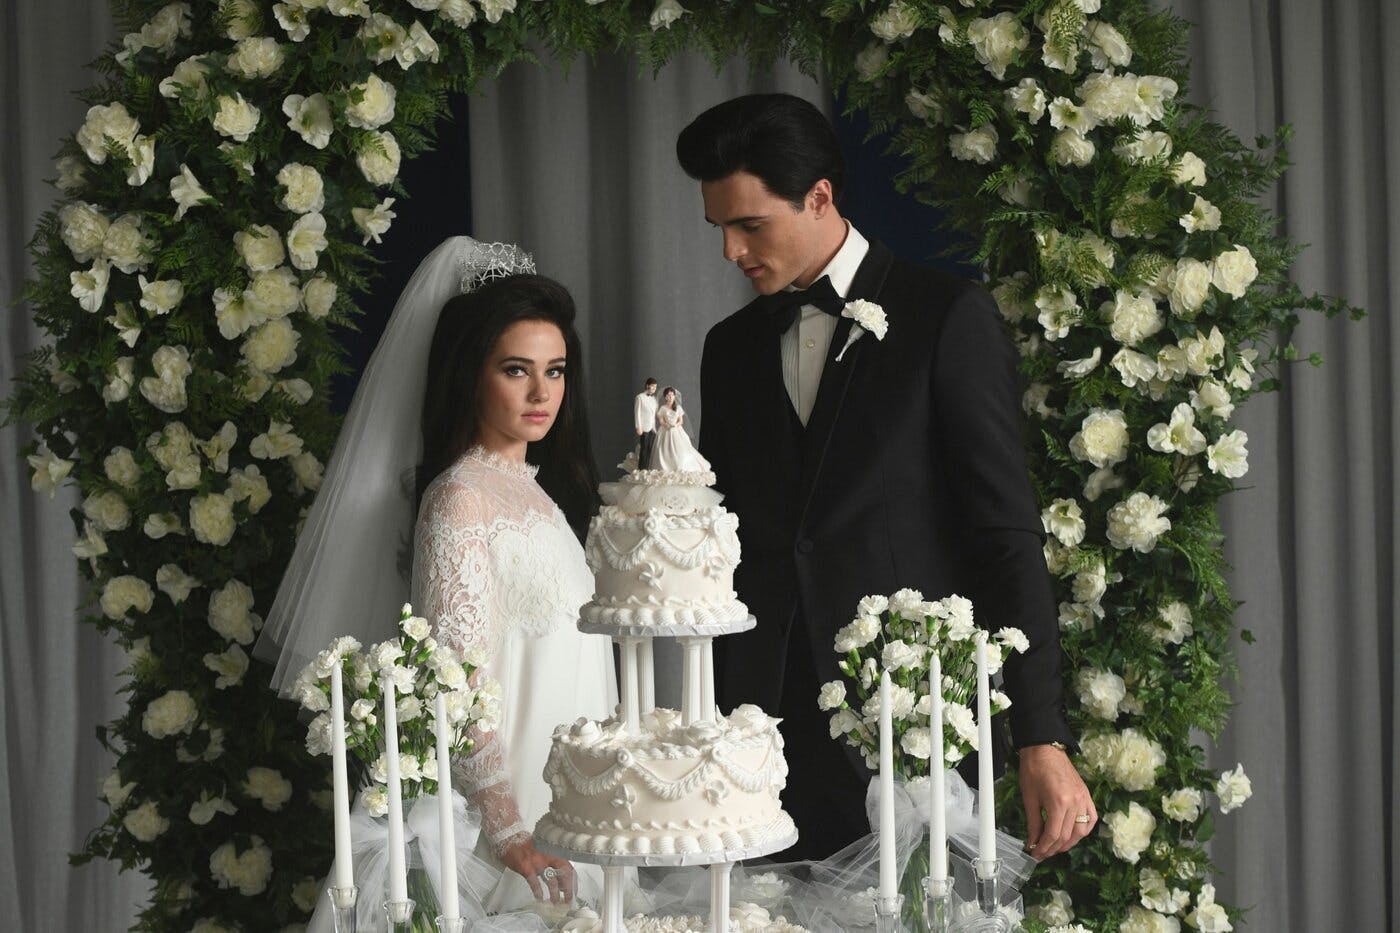 formal wear suit photography people wedding bridegroom dress portrait wedding cake wedding gown